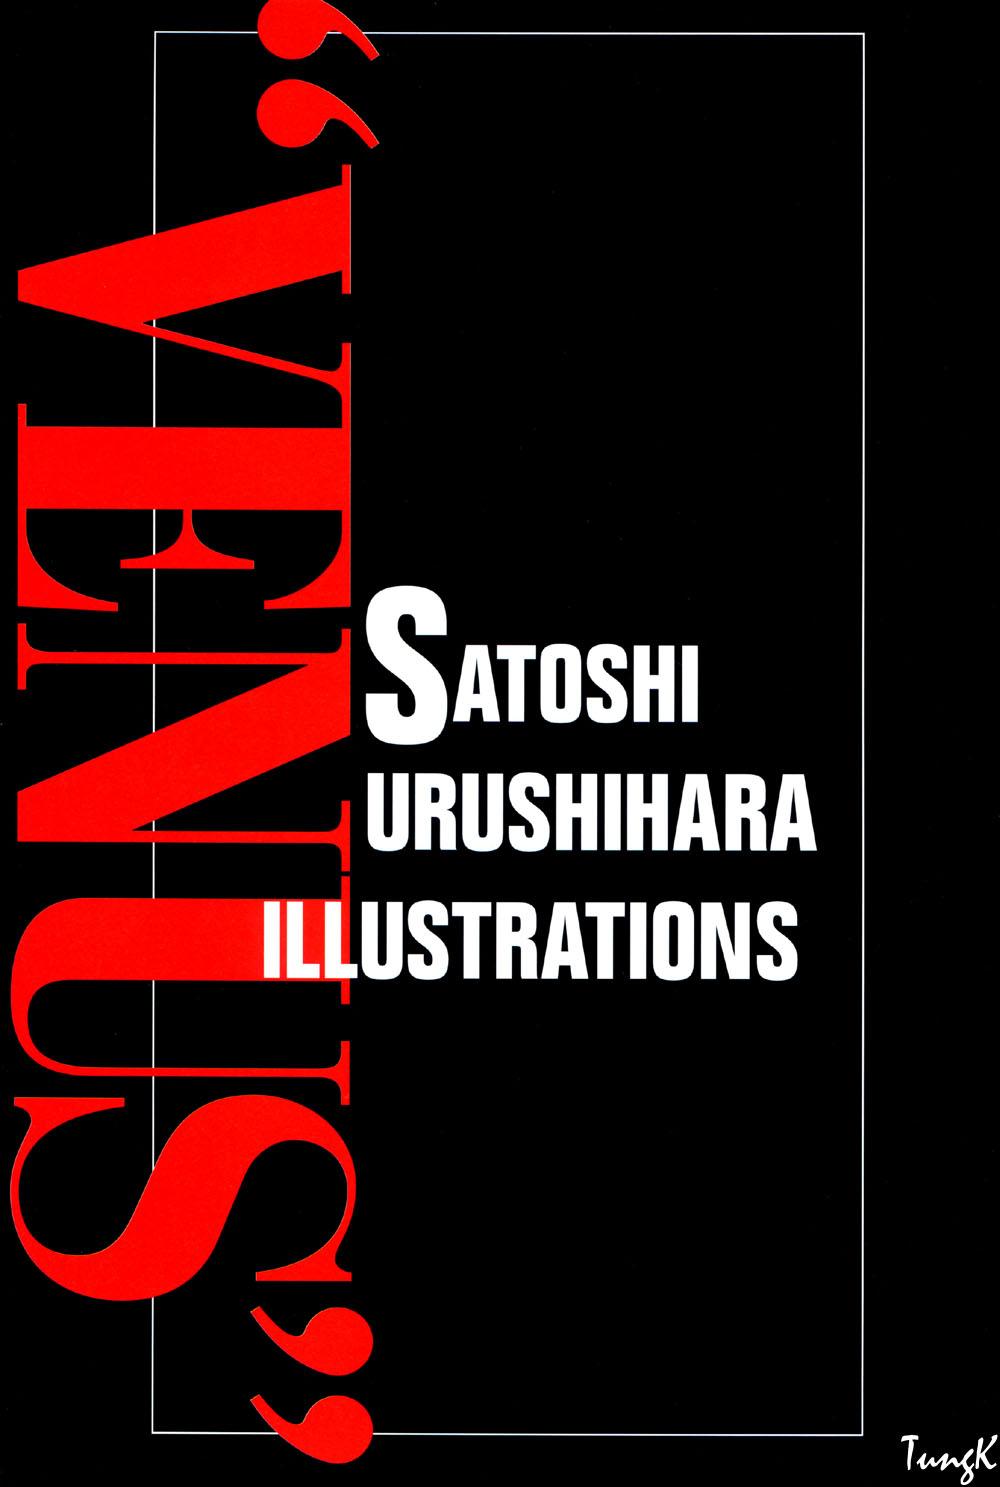 Venus Urushihara Satoshi Illustration Shuu 2